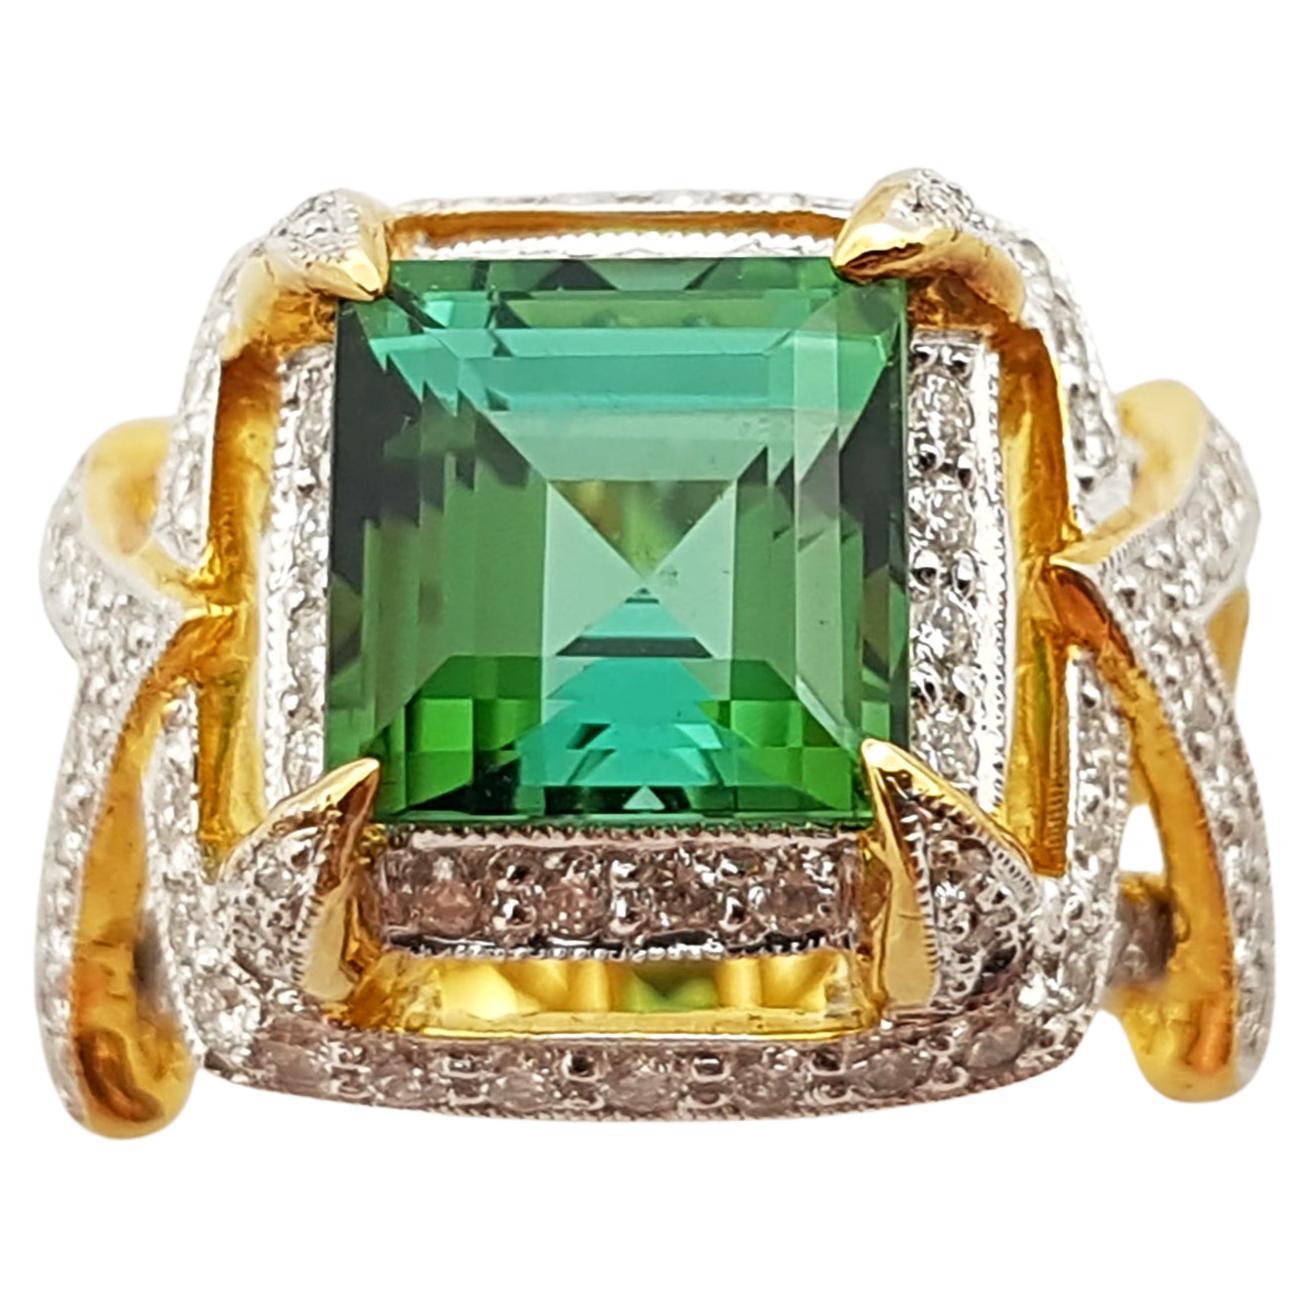 Green Tourmaline with Diamond Ring Set in 18 Karat Gold Settings